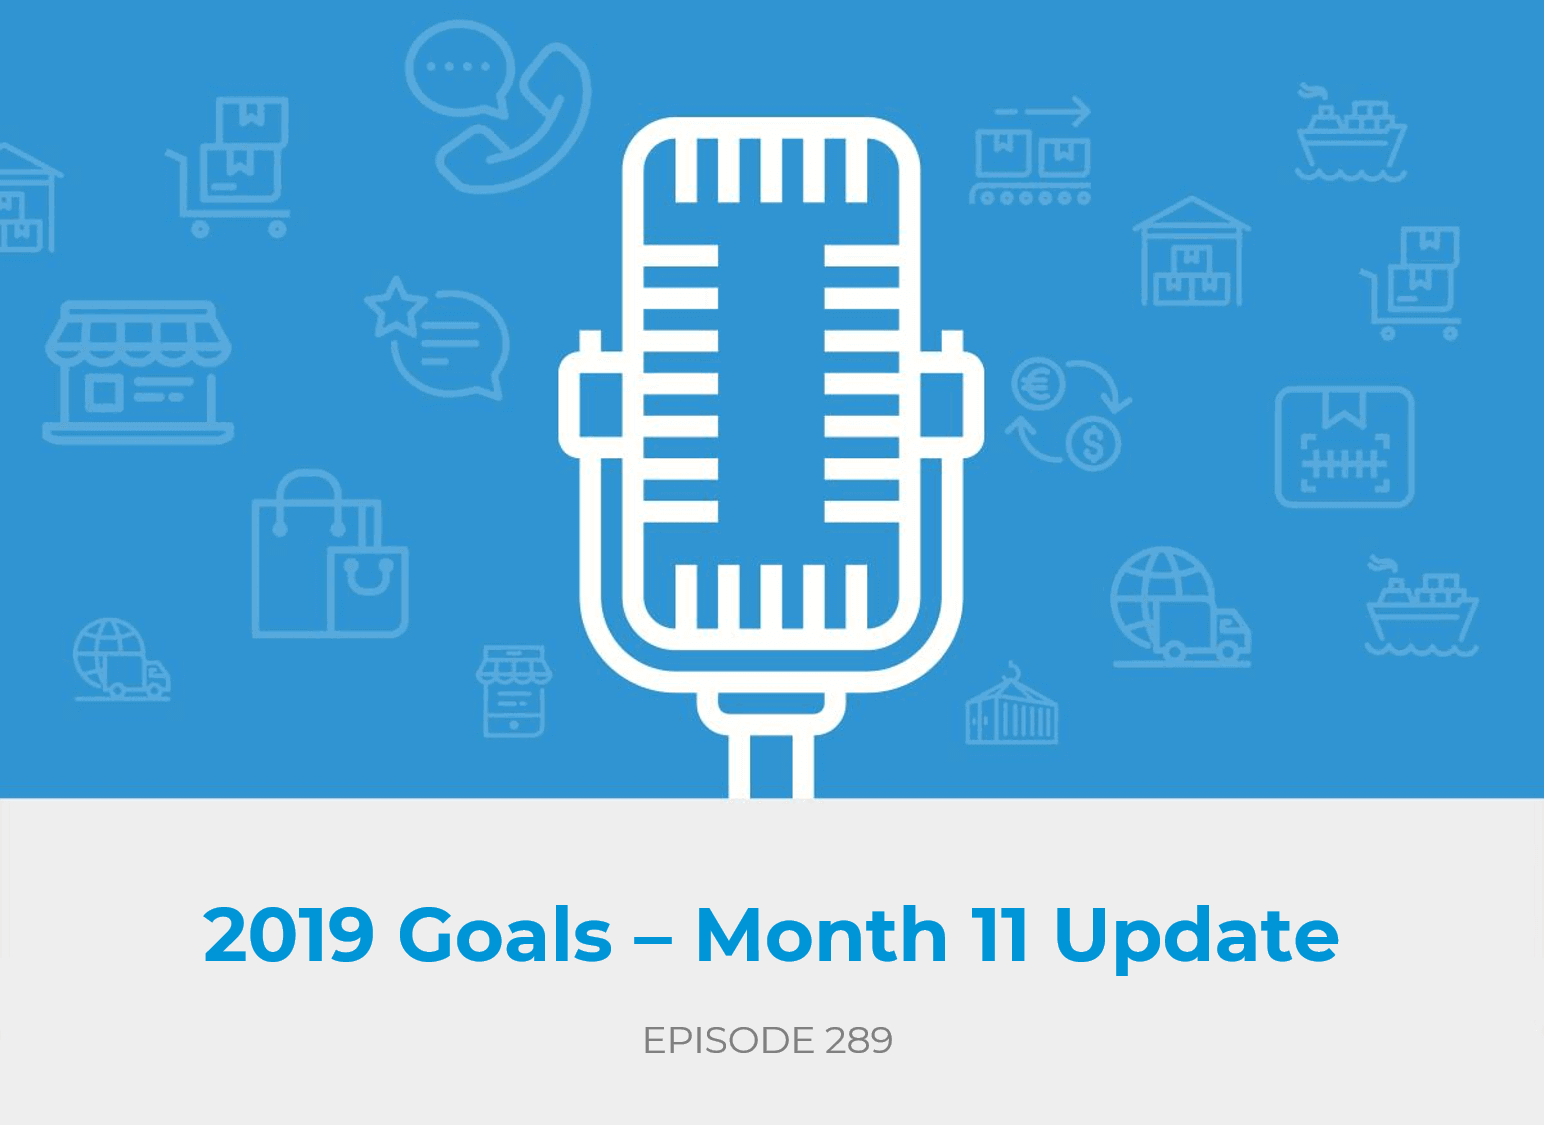 EP289: 2019 Goals - Month 11 Update